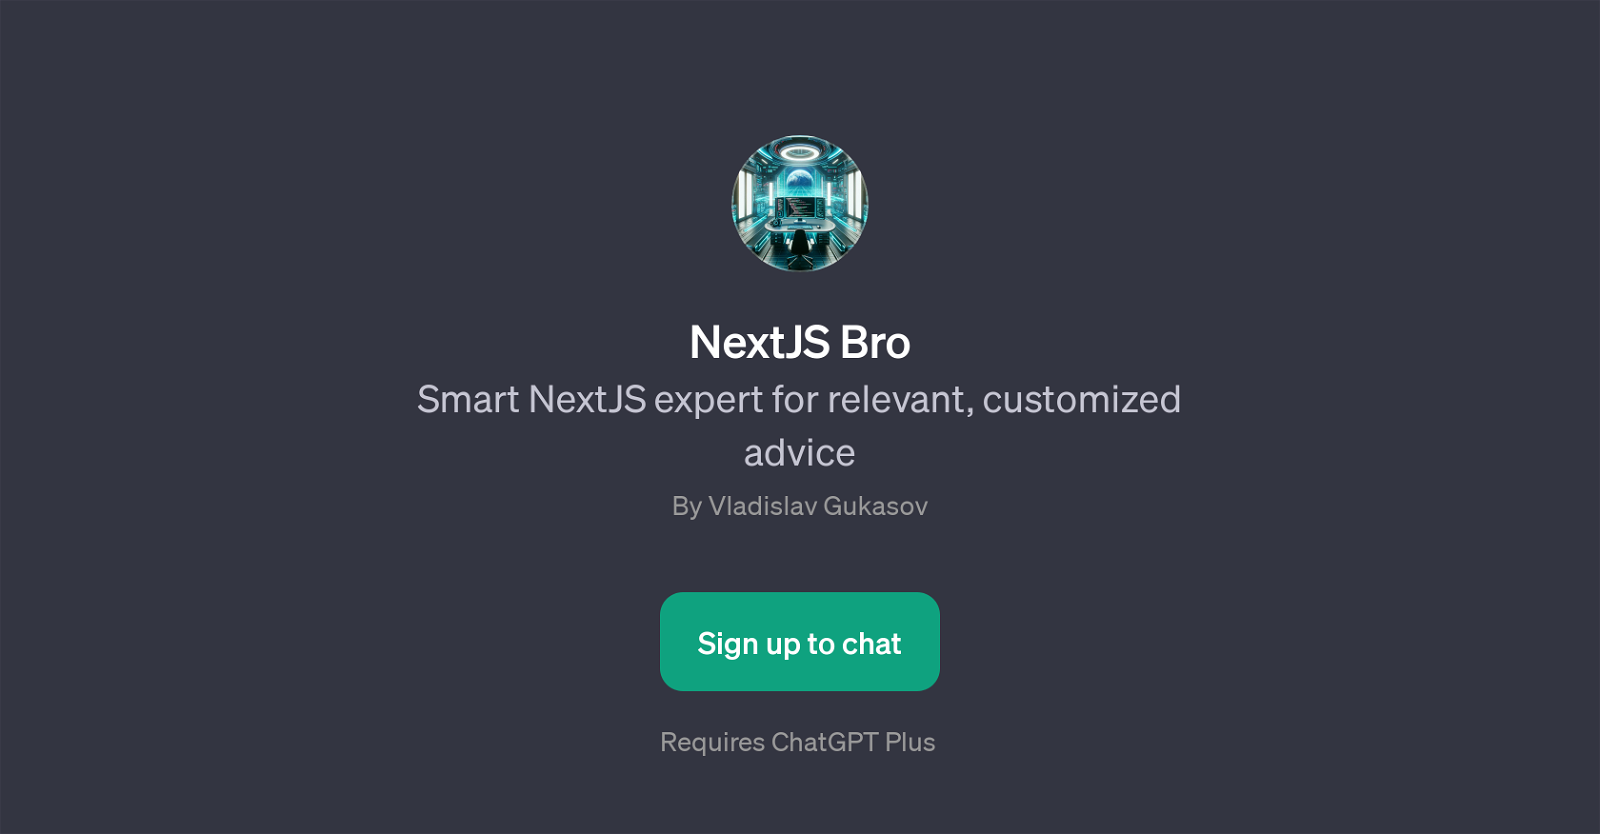 NextJS Bro website